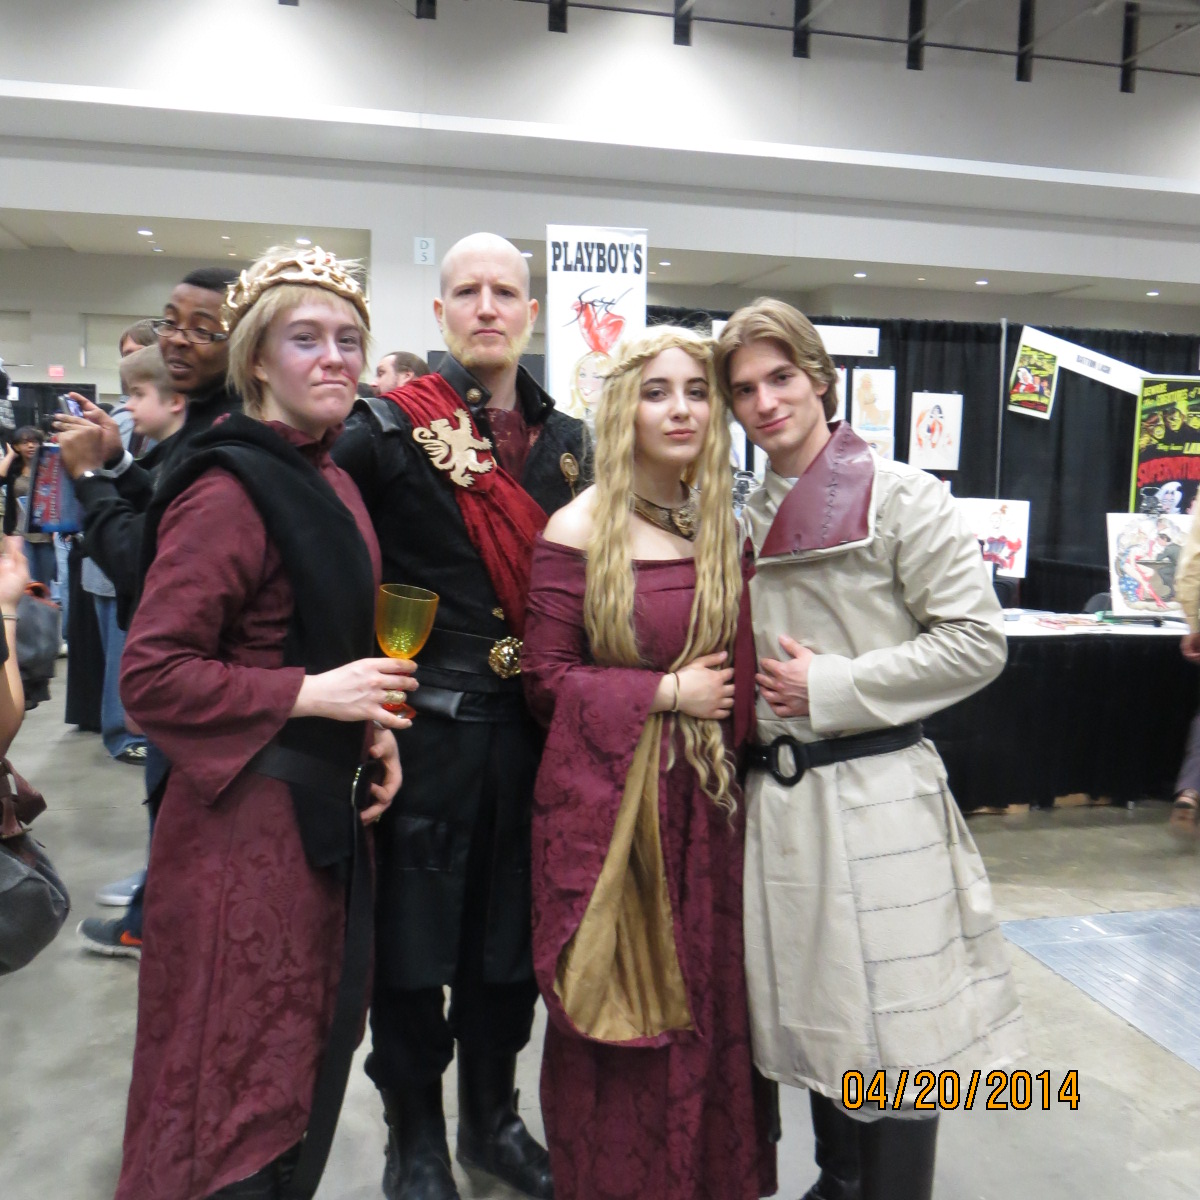 Lannister Family from left, Kenna Libes (Joffrey), Joe Graves (Tywin) Megan Horak (Cersei), Justin Schoville (Jamie)